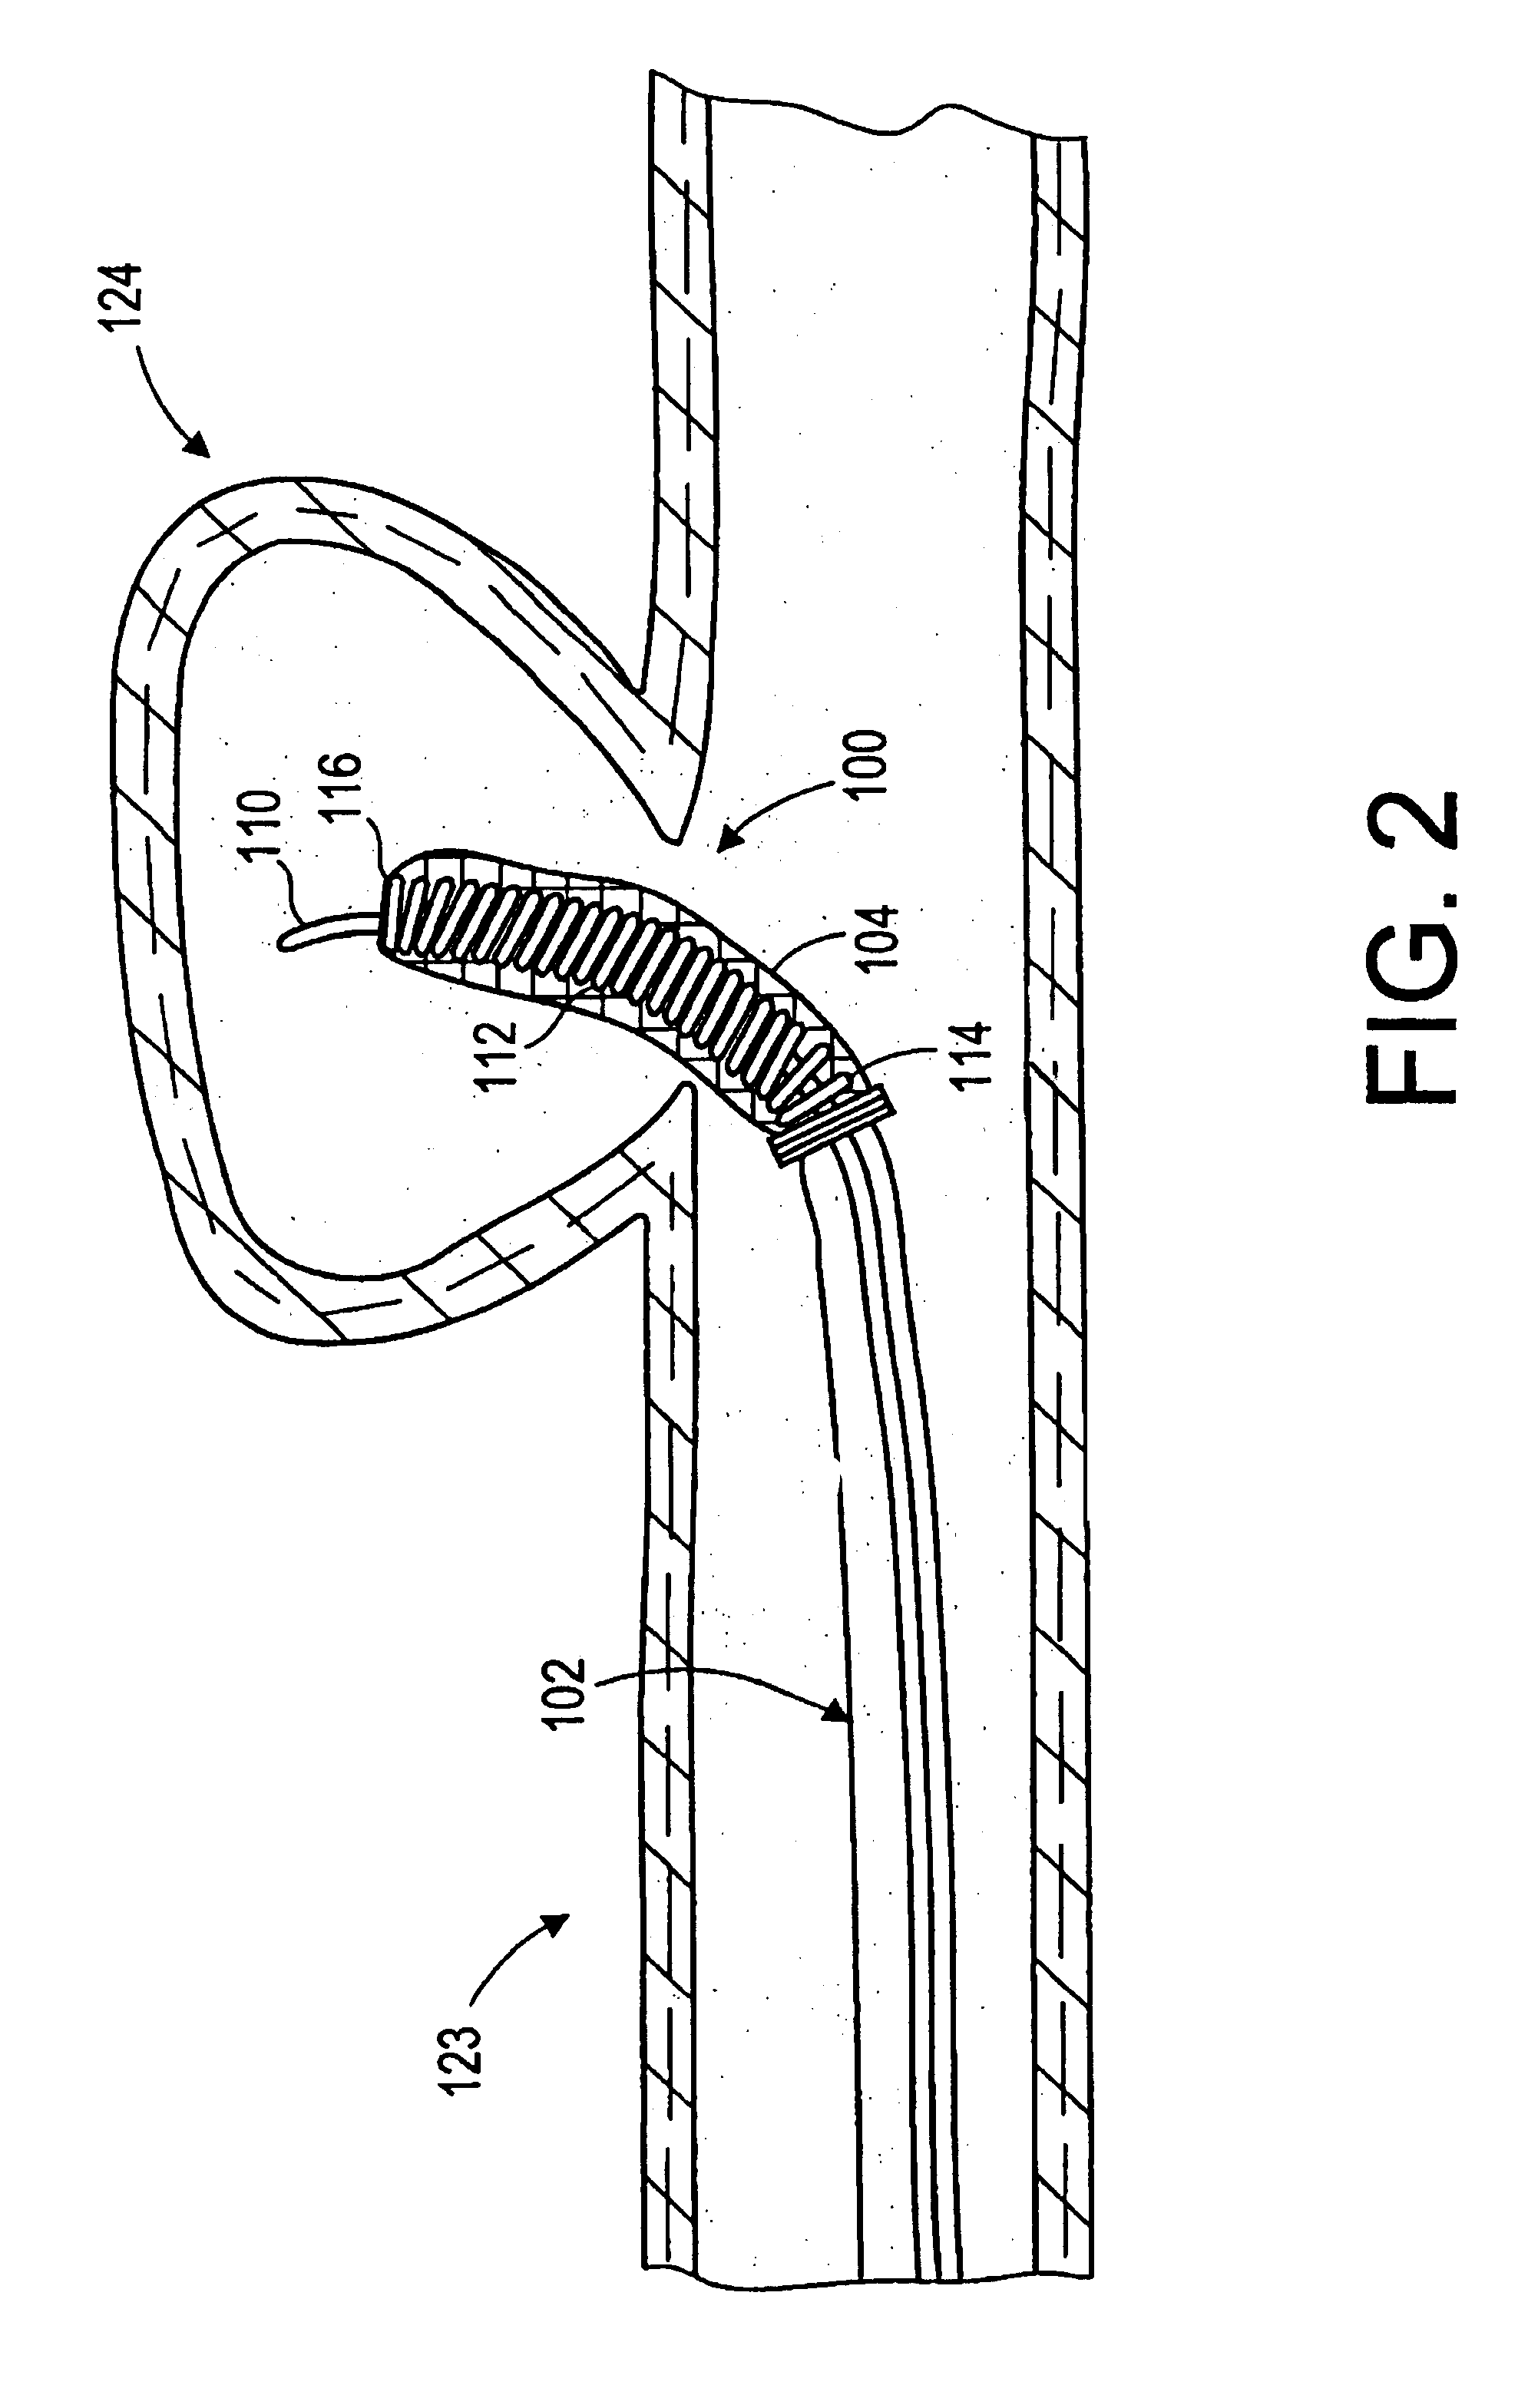 Aneurysm liner with multi-segment extender